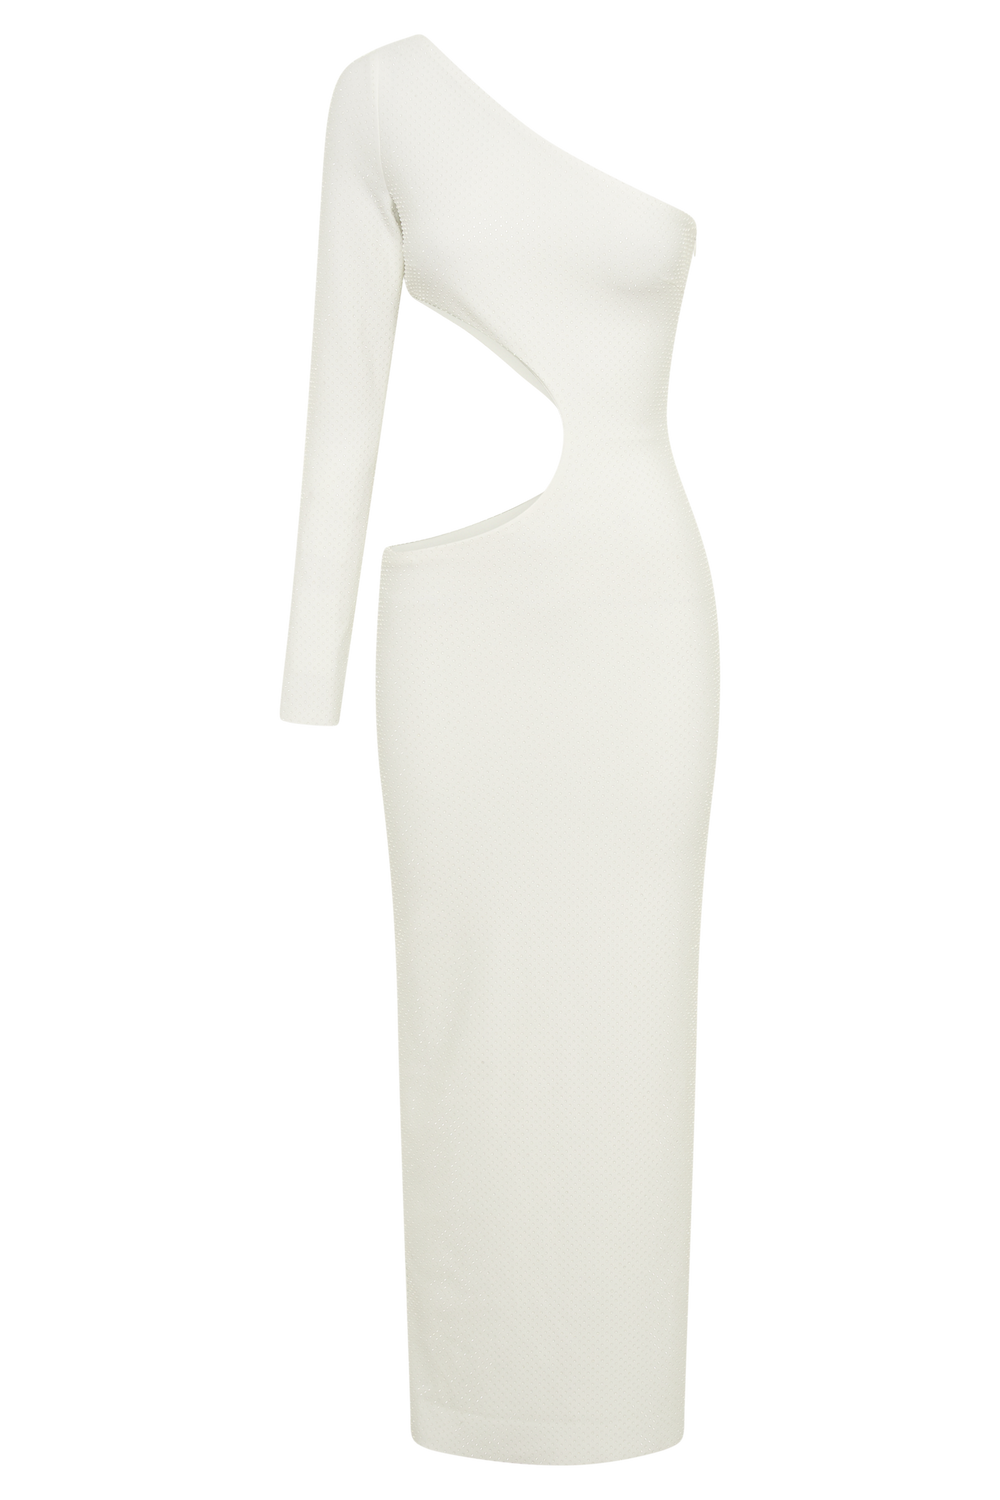 Alisson Hot Fix Crepe One Shoulder Maxi Dress - White